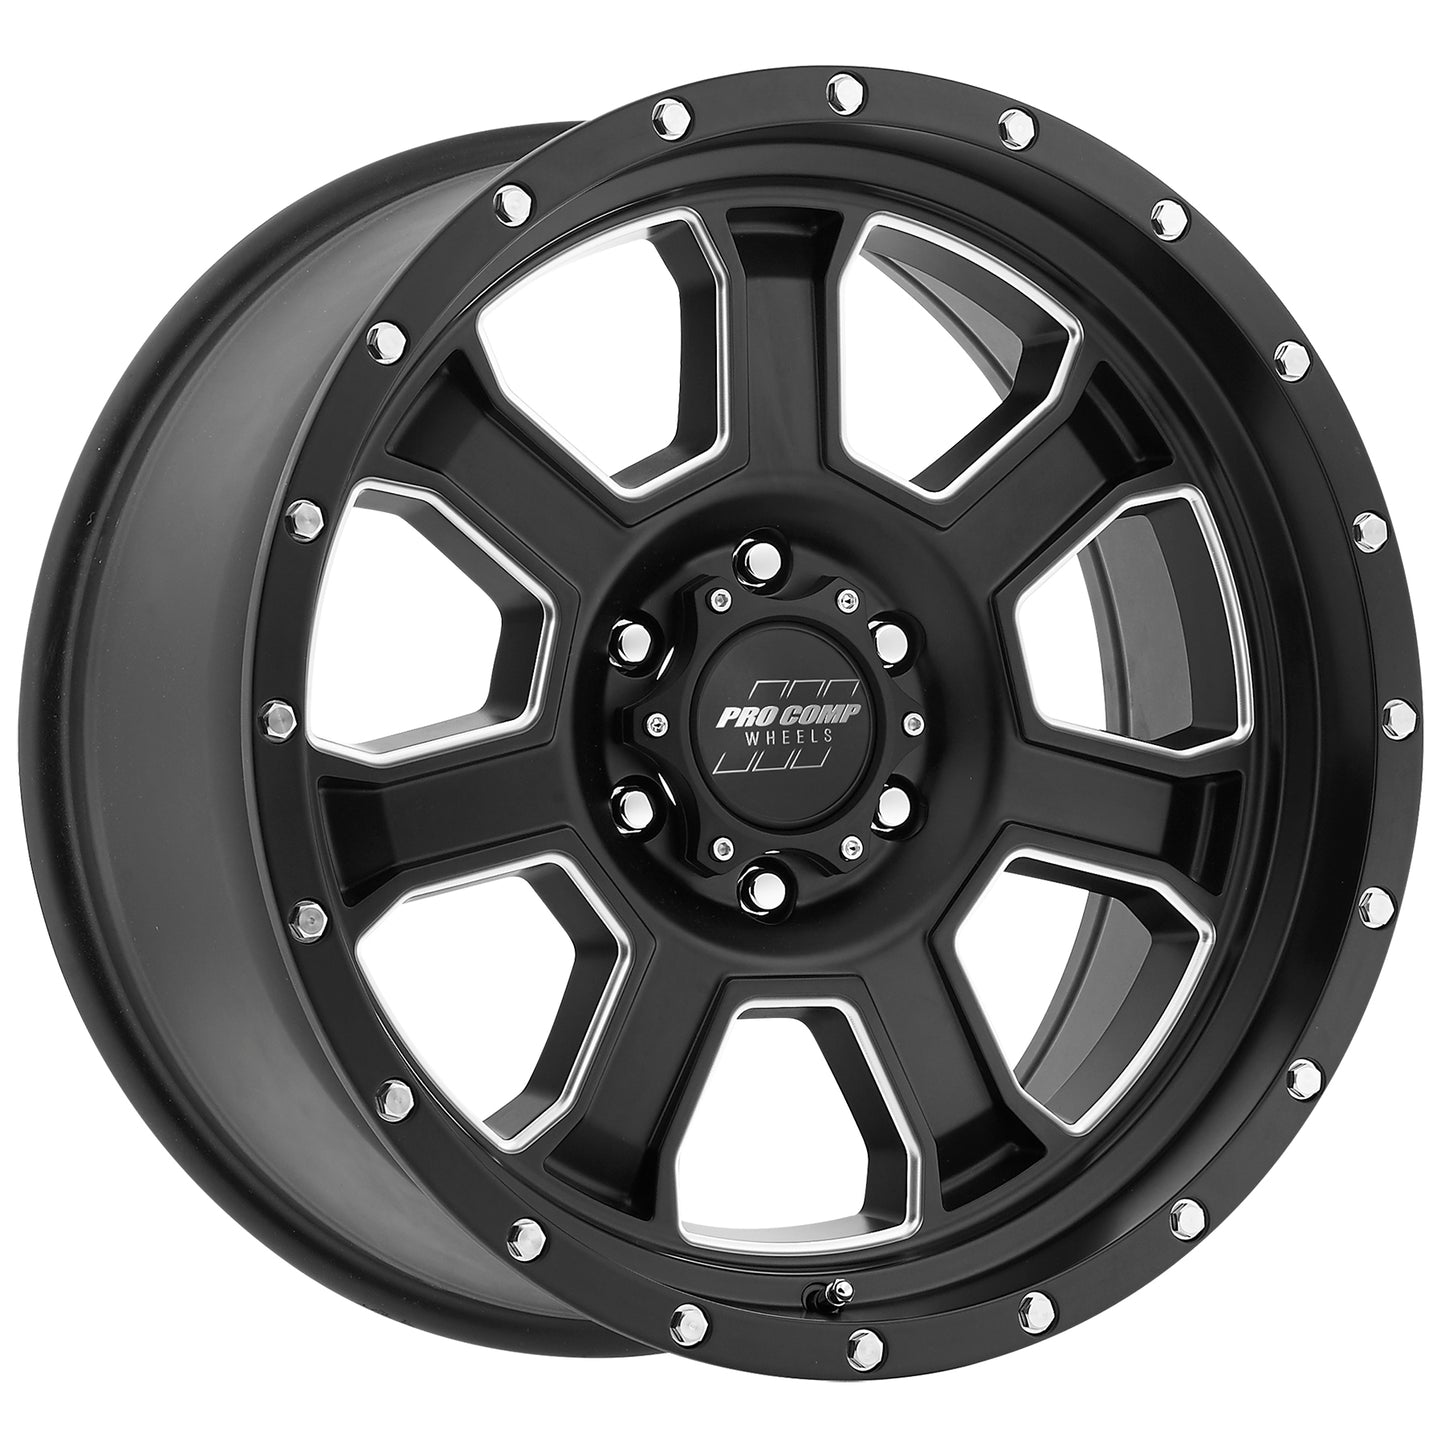 Pro Comp Wheels Sledge Satin Black Milled 17X9 6x5.5 4.75BS Offset -6mm Cap P/N 503434200 5143-7983